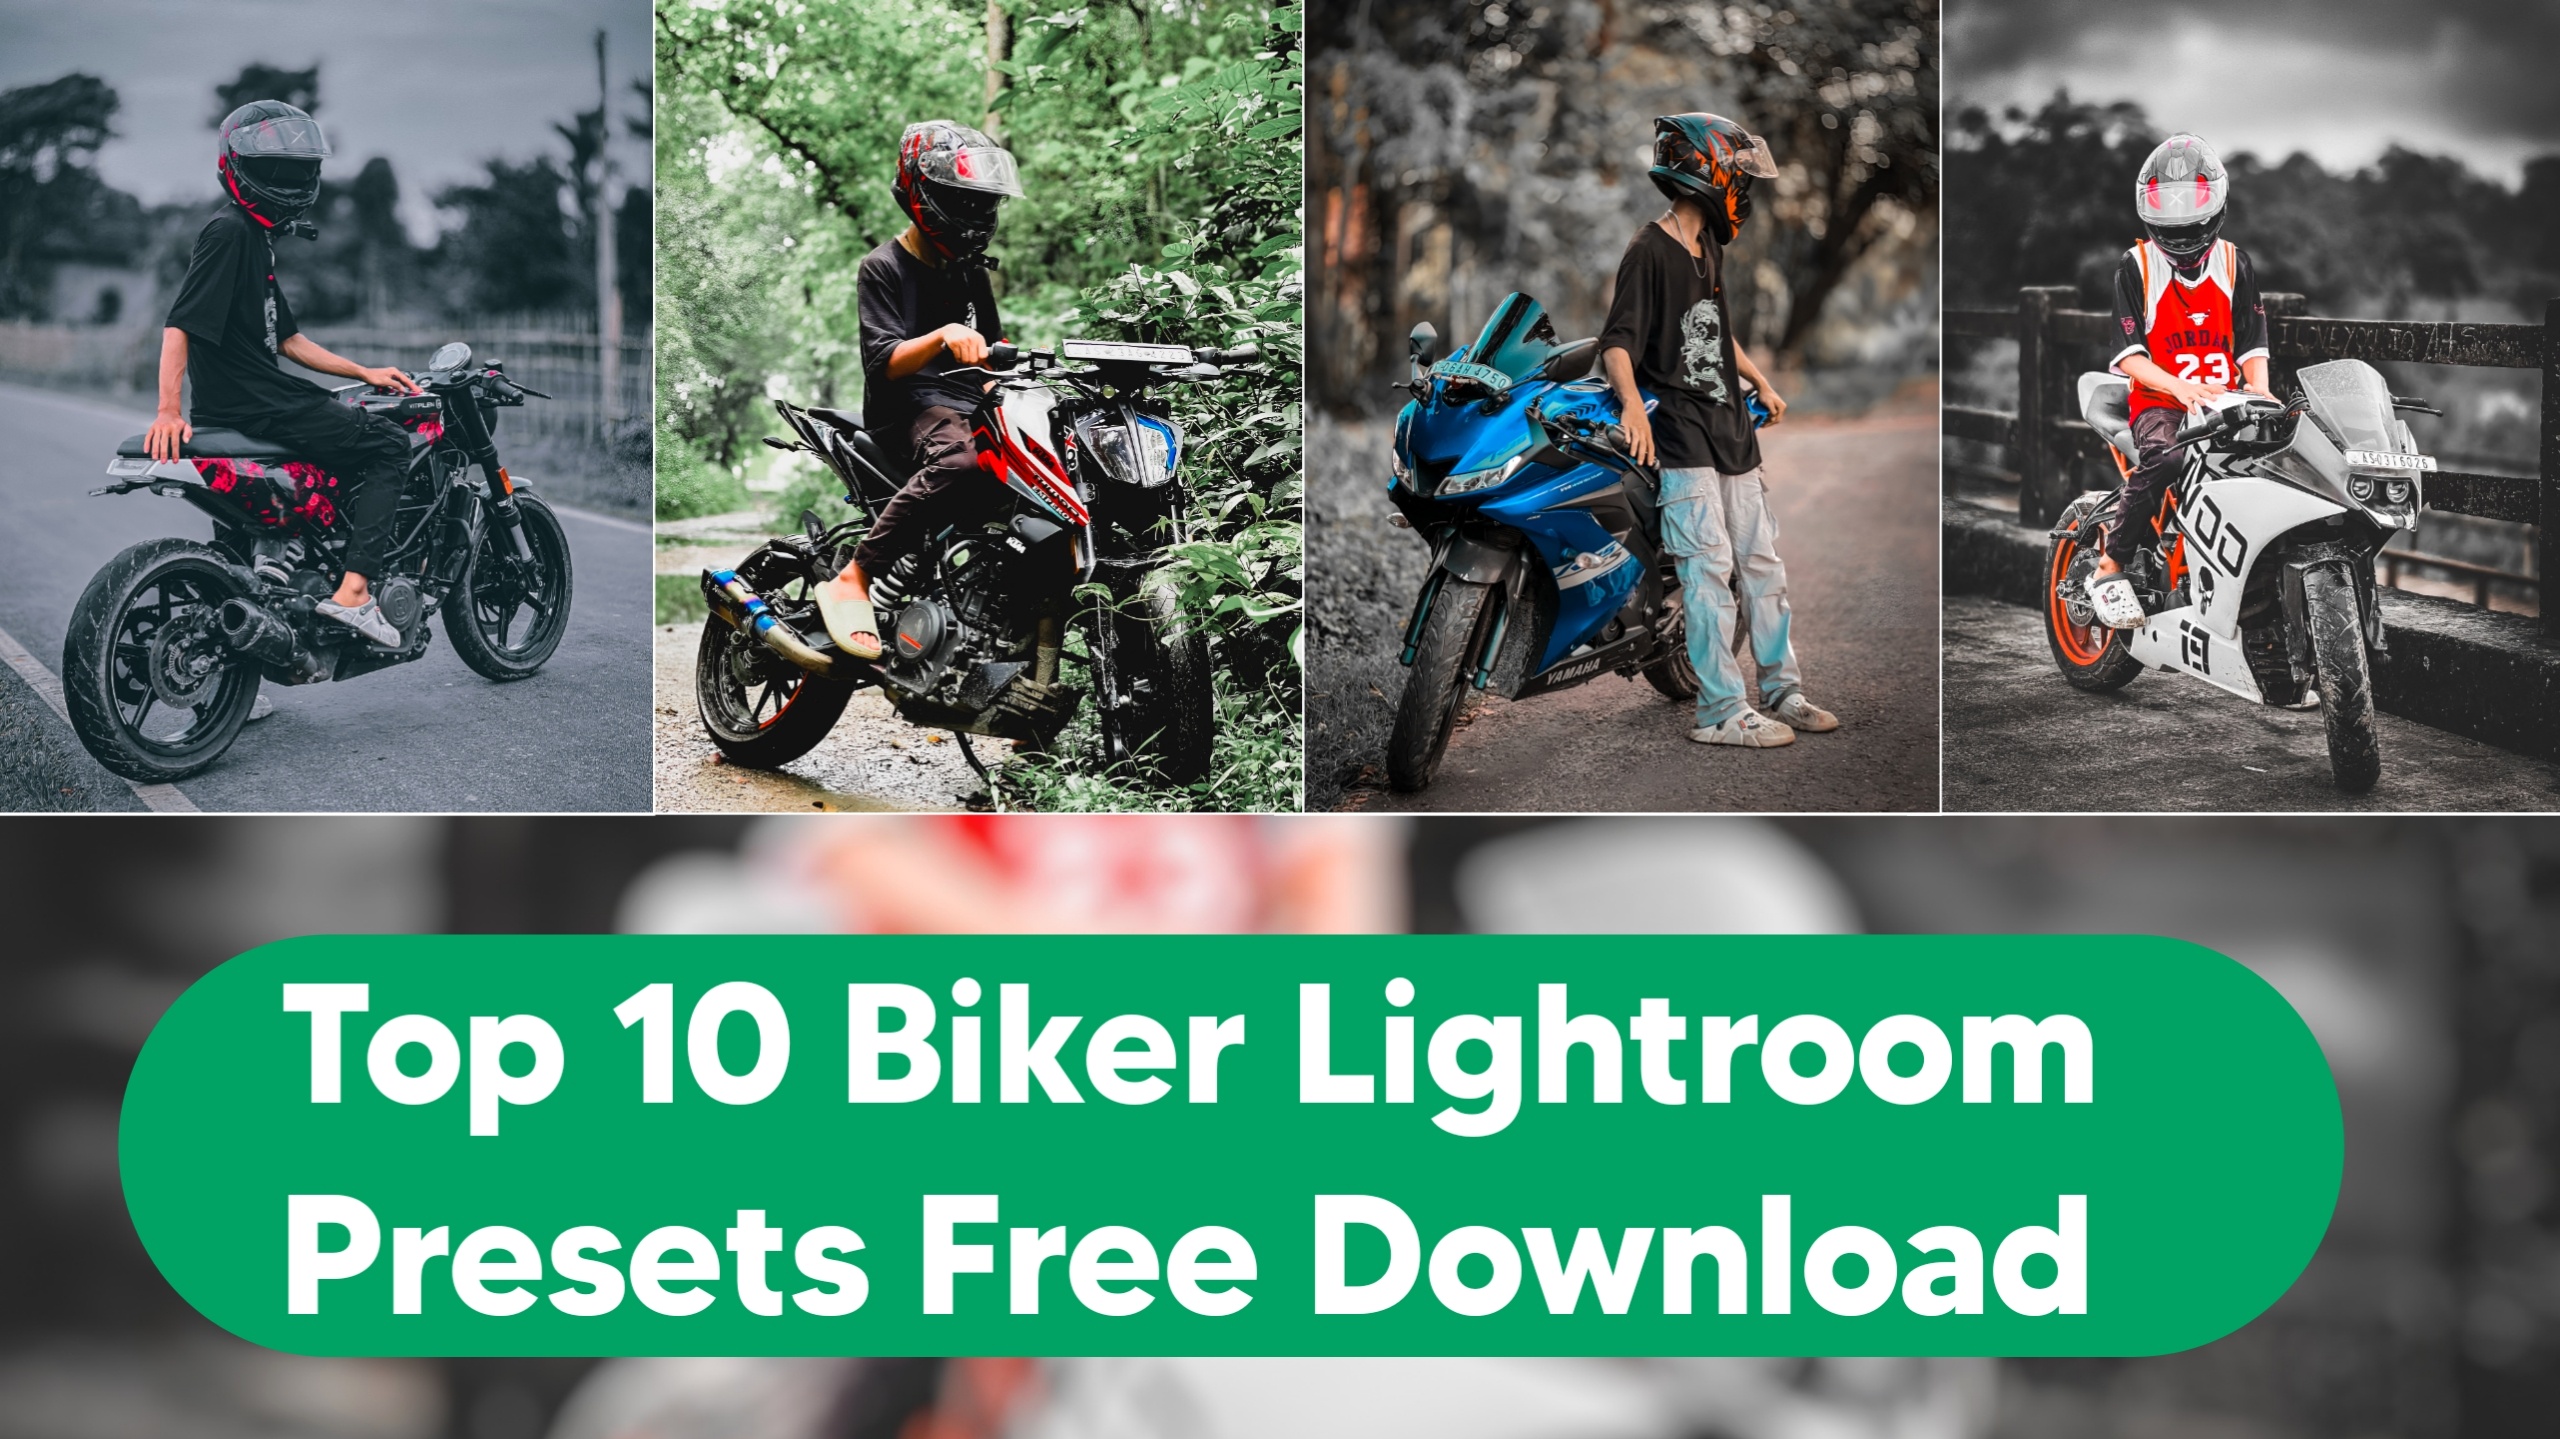 Top 10 Biker Lightroom Presets Free Download